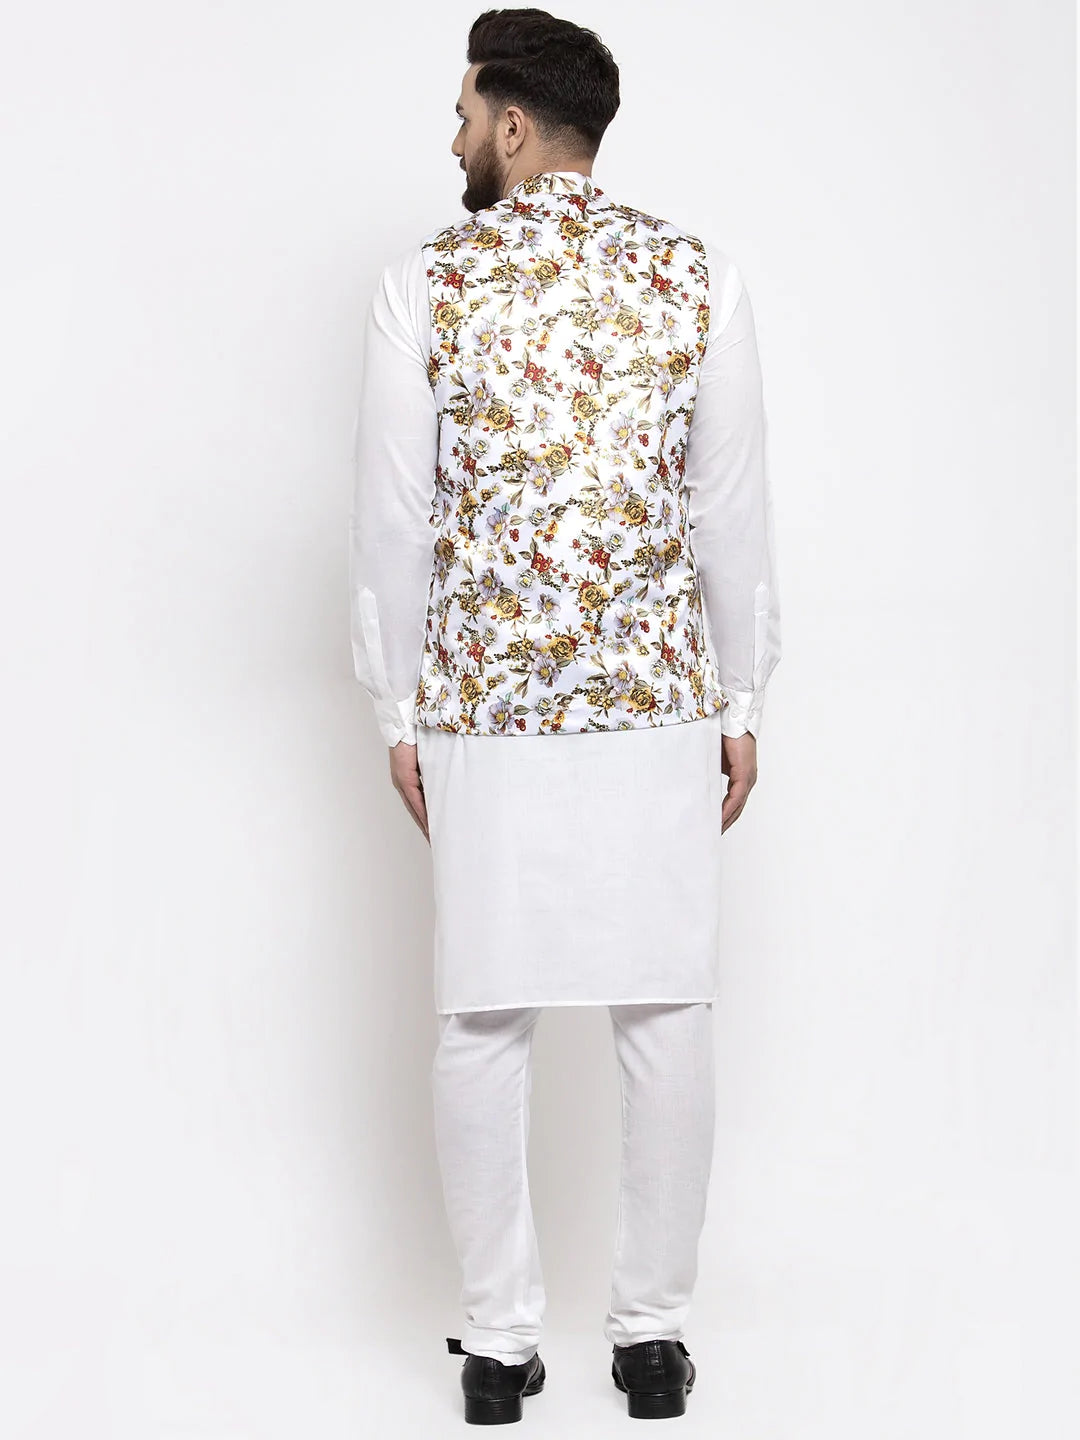 Jompers Men's Solid Cotton Kurta Pajama with Printed Waistcoat ( JOKP WC 4058 White-W )